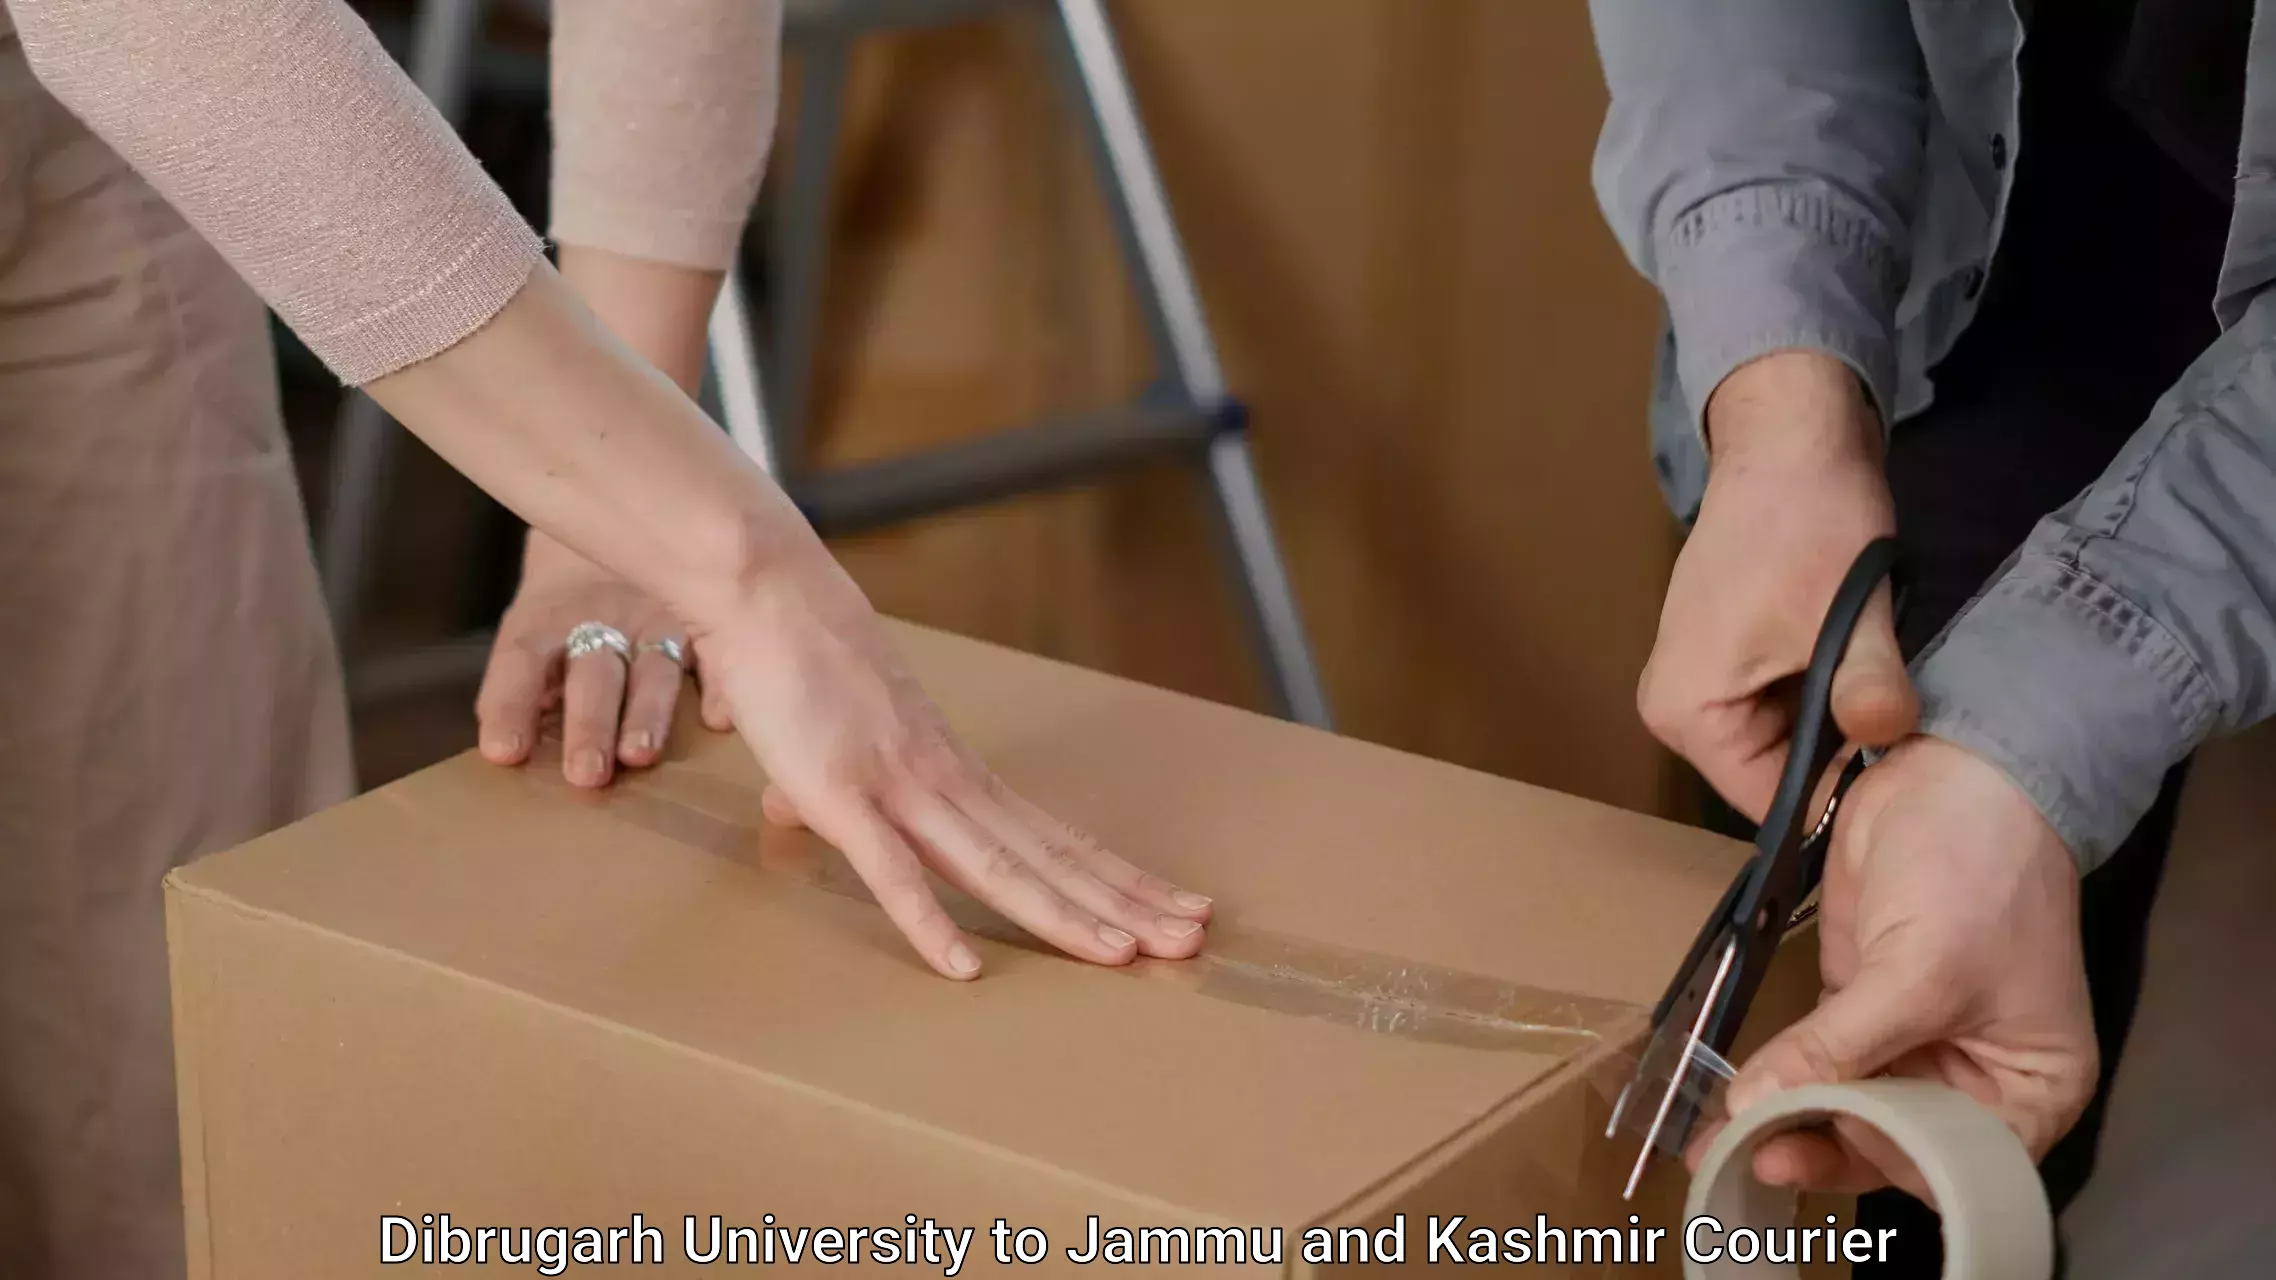 Quick furniture moving Dibrugarh University to University of Jammu